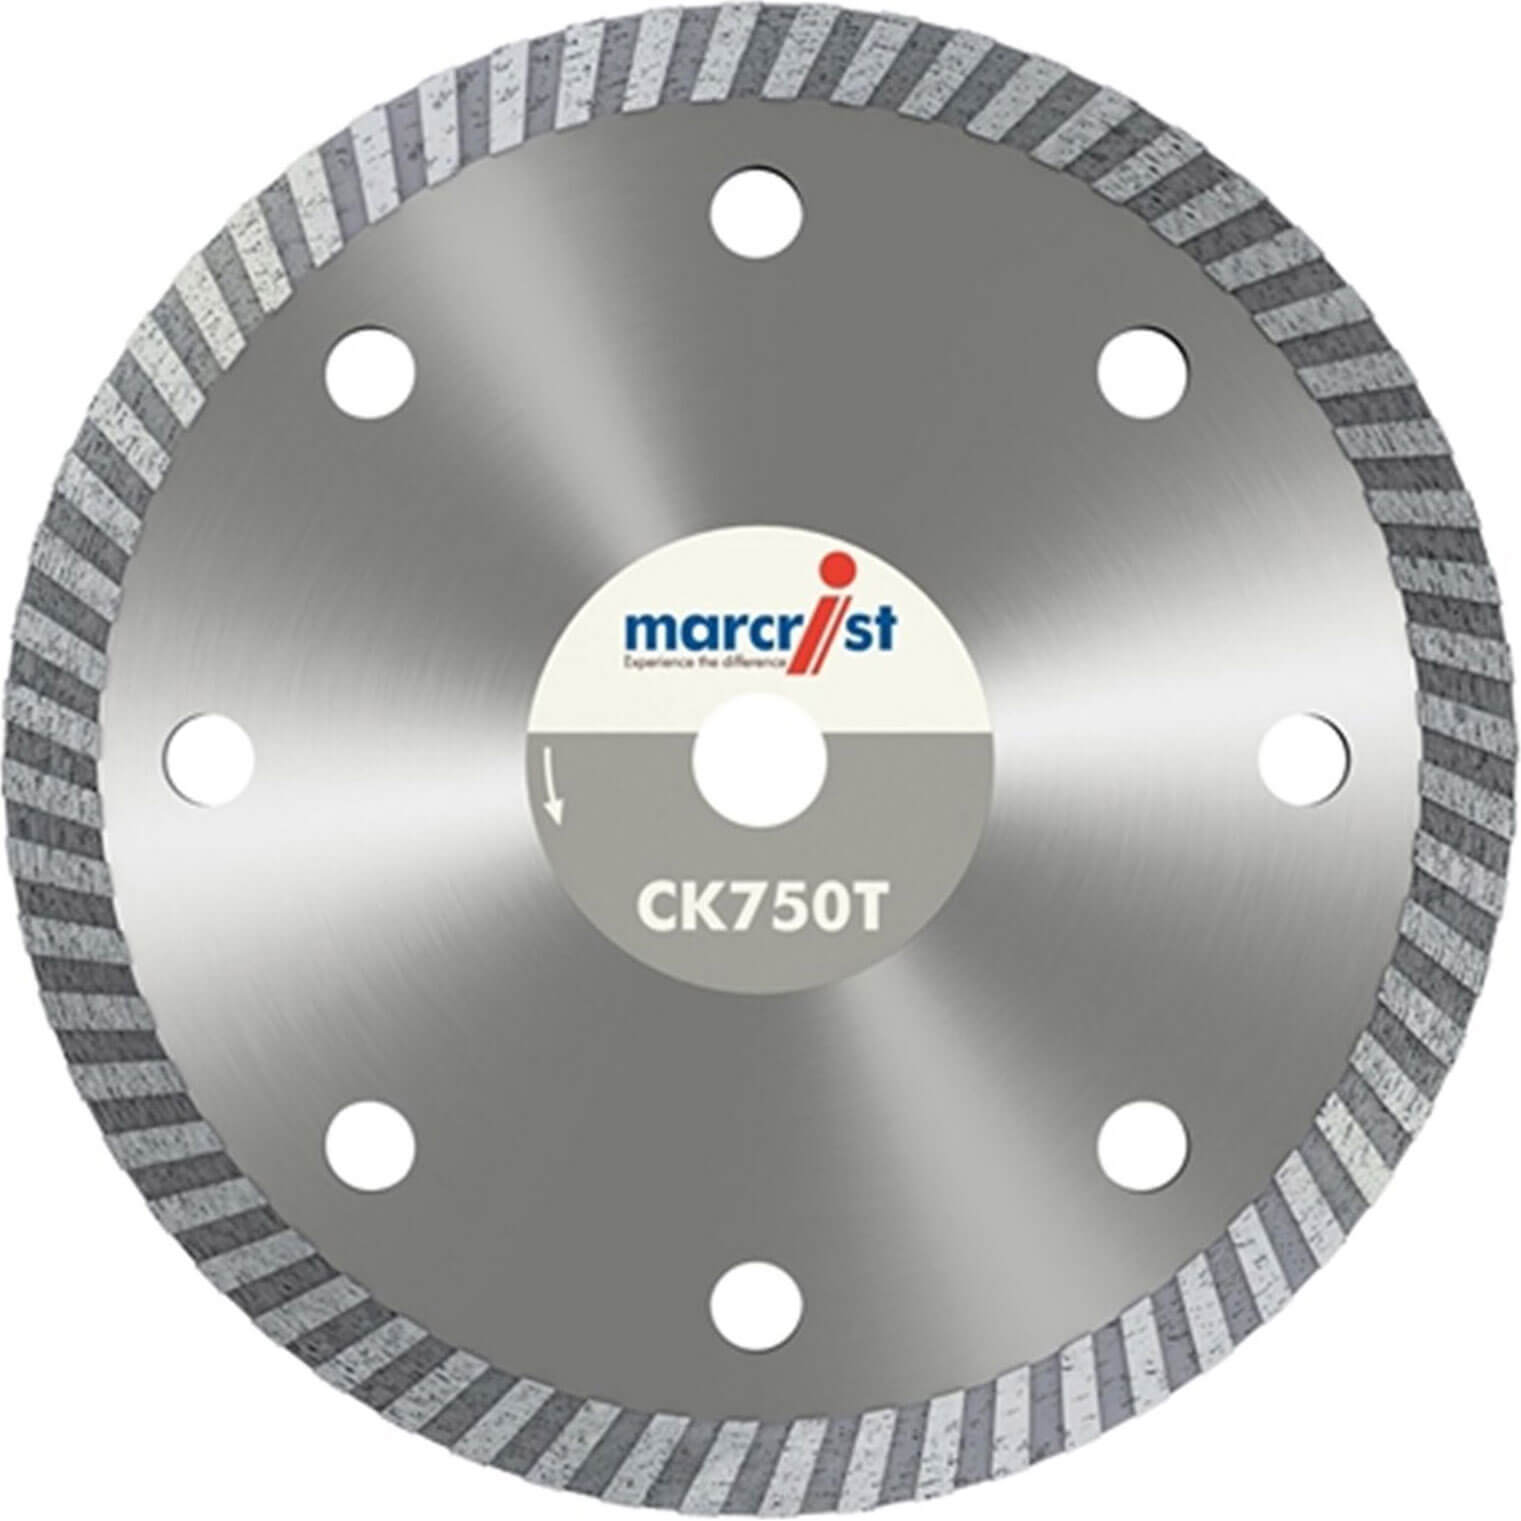 Photo of Marcrist Ck750t Ultra Thin Turbo Tile Diamond Cutting Disc 180mm